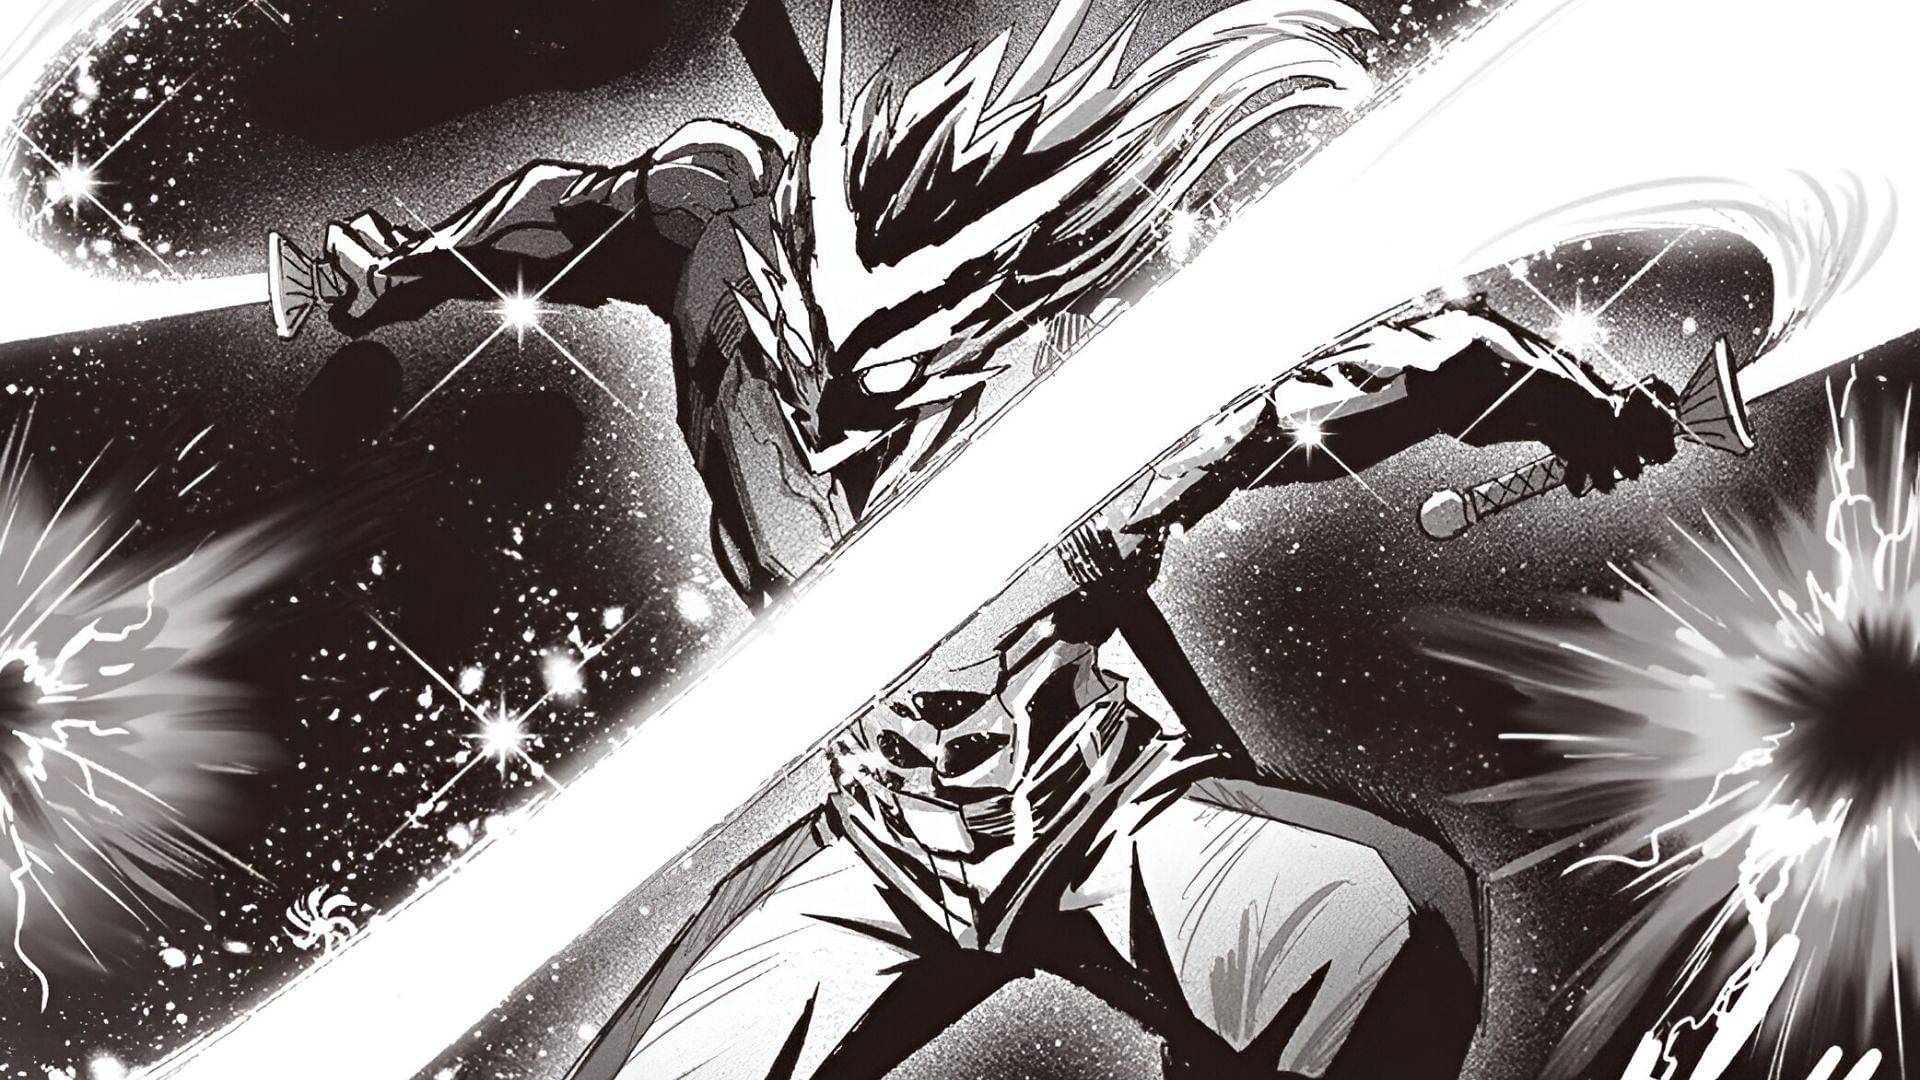 Empty Void as seen in the One Punch Man manga (Image via Shueisha)